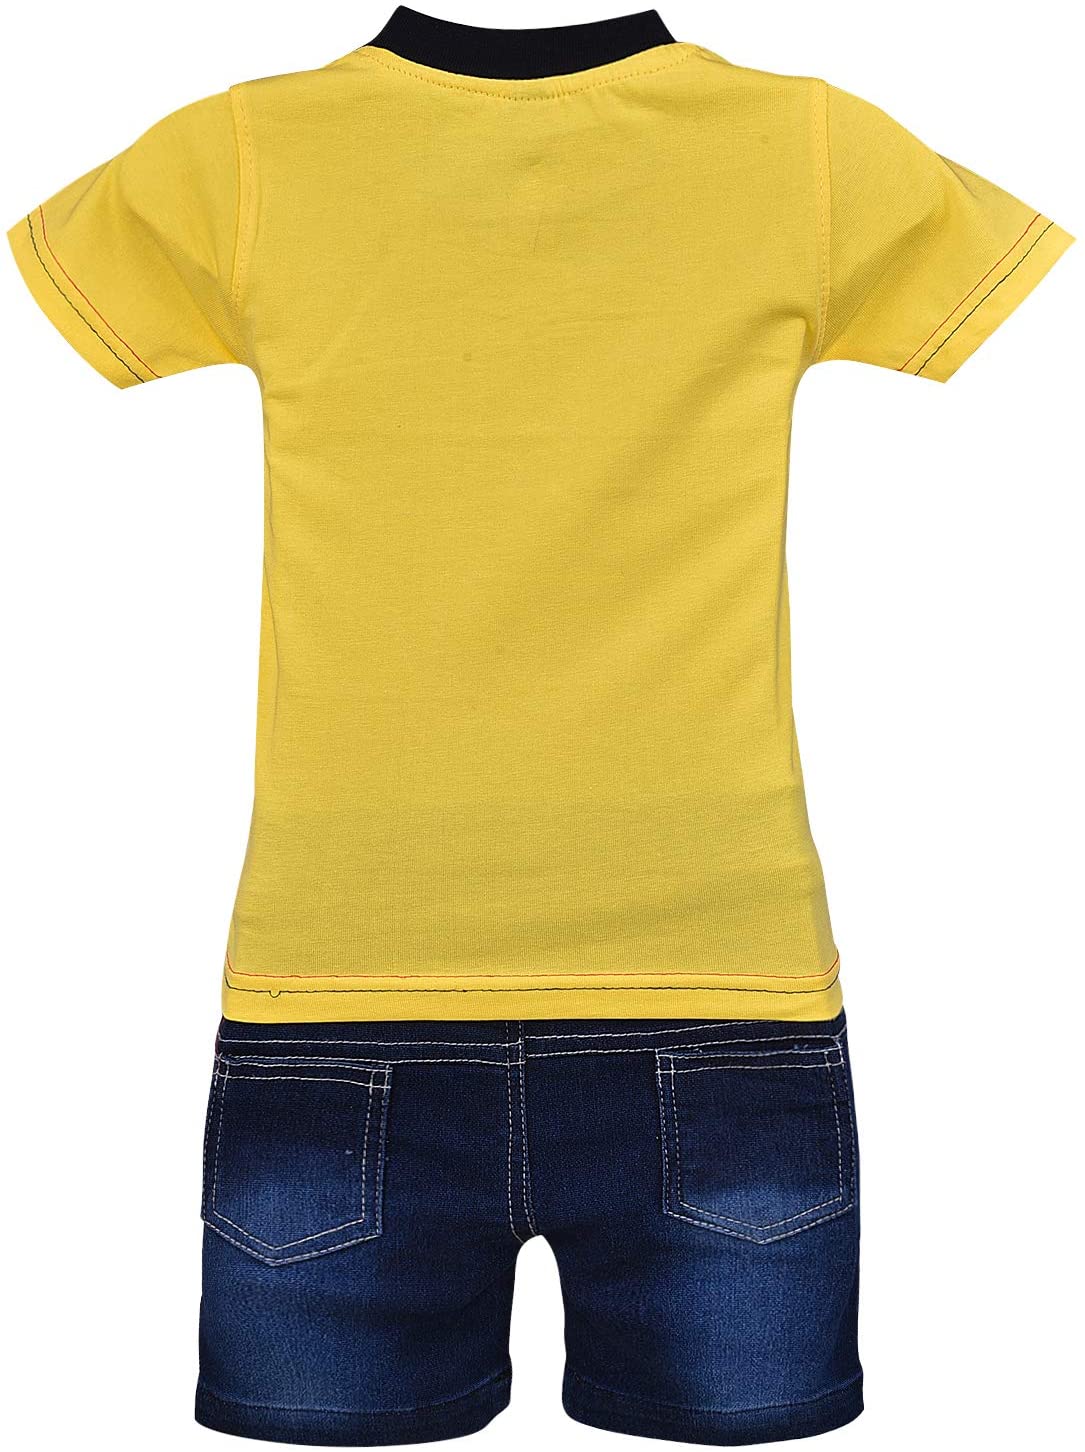 Wish Karo Unisex Clothing Sets for Boys & Baby Girls-(bt22y)